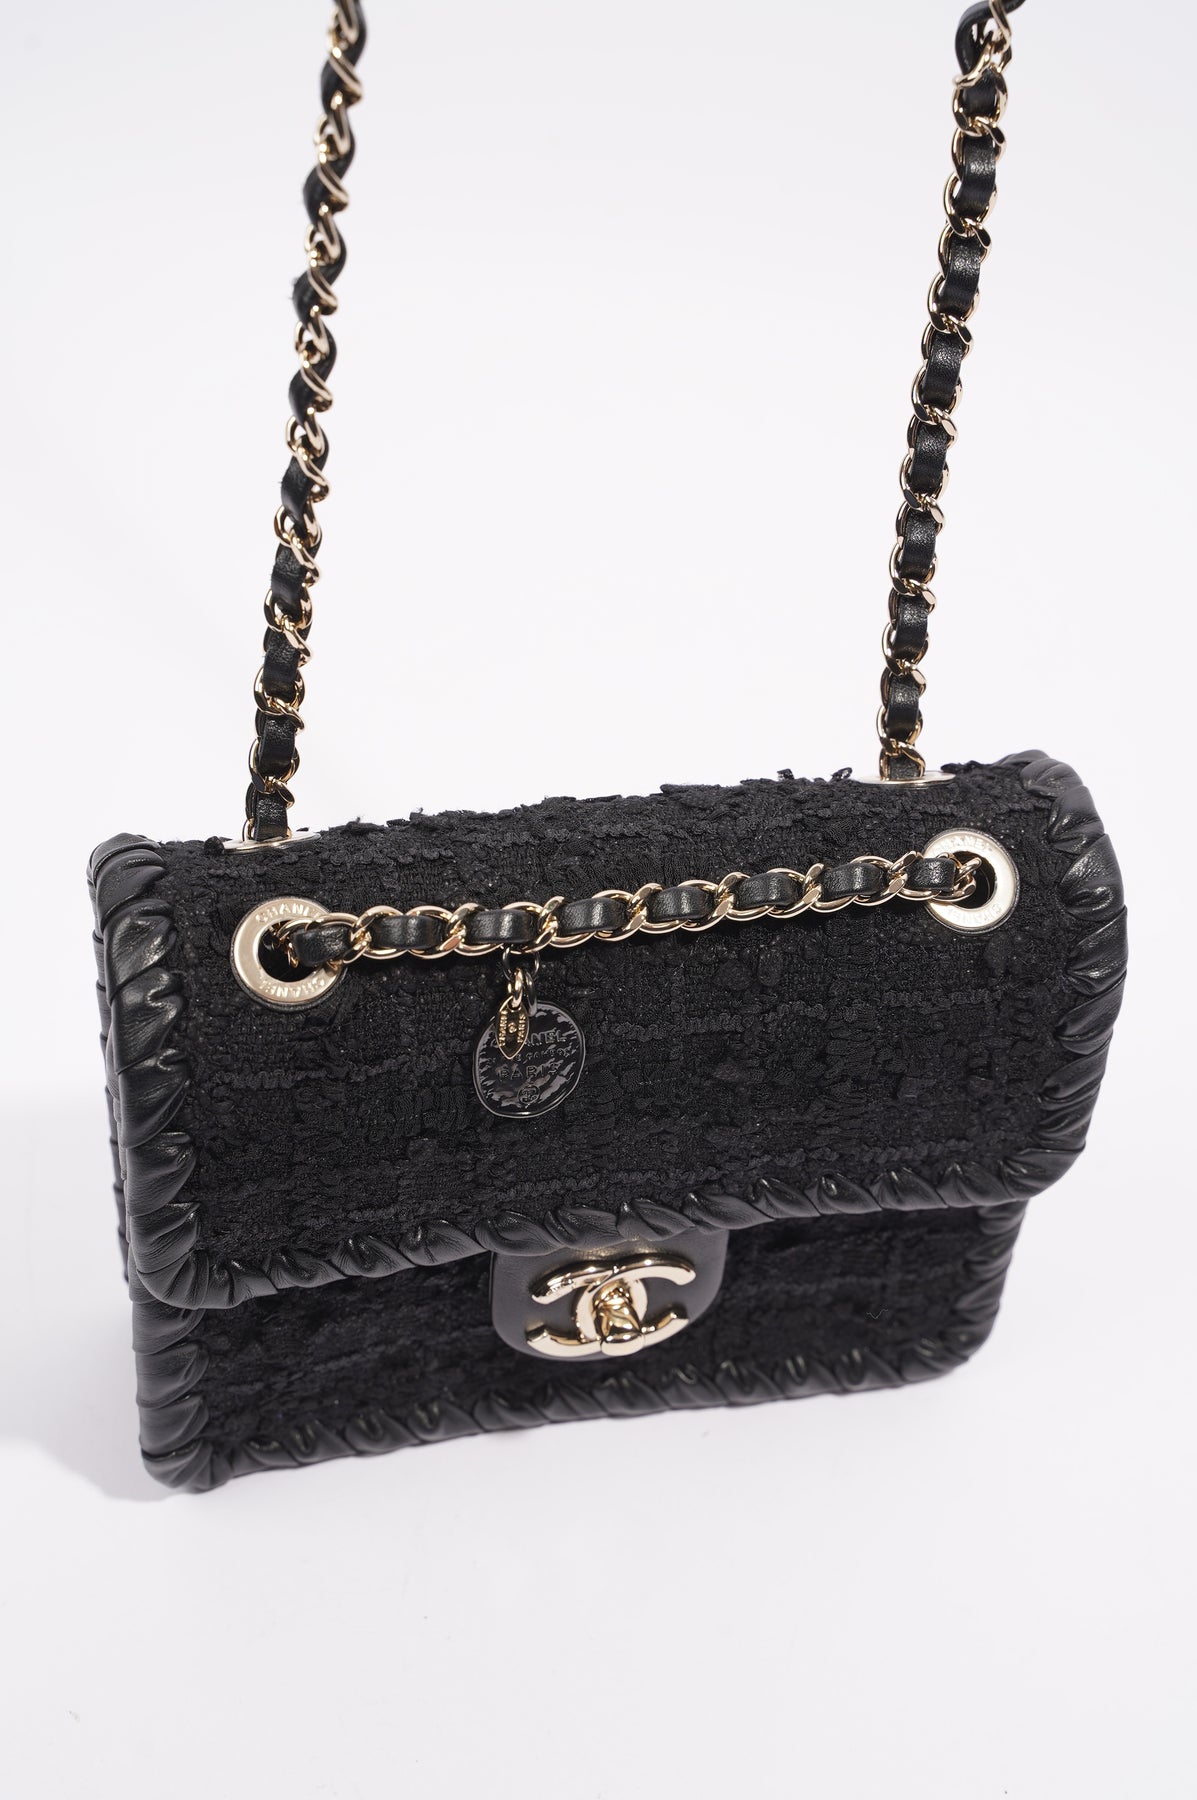 Trending Now: Tweed Chanel Bags